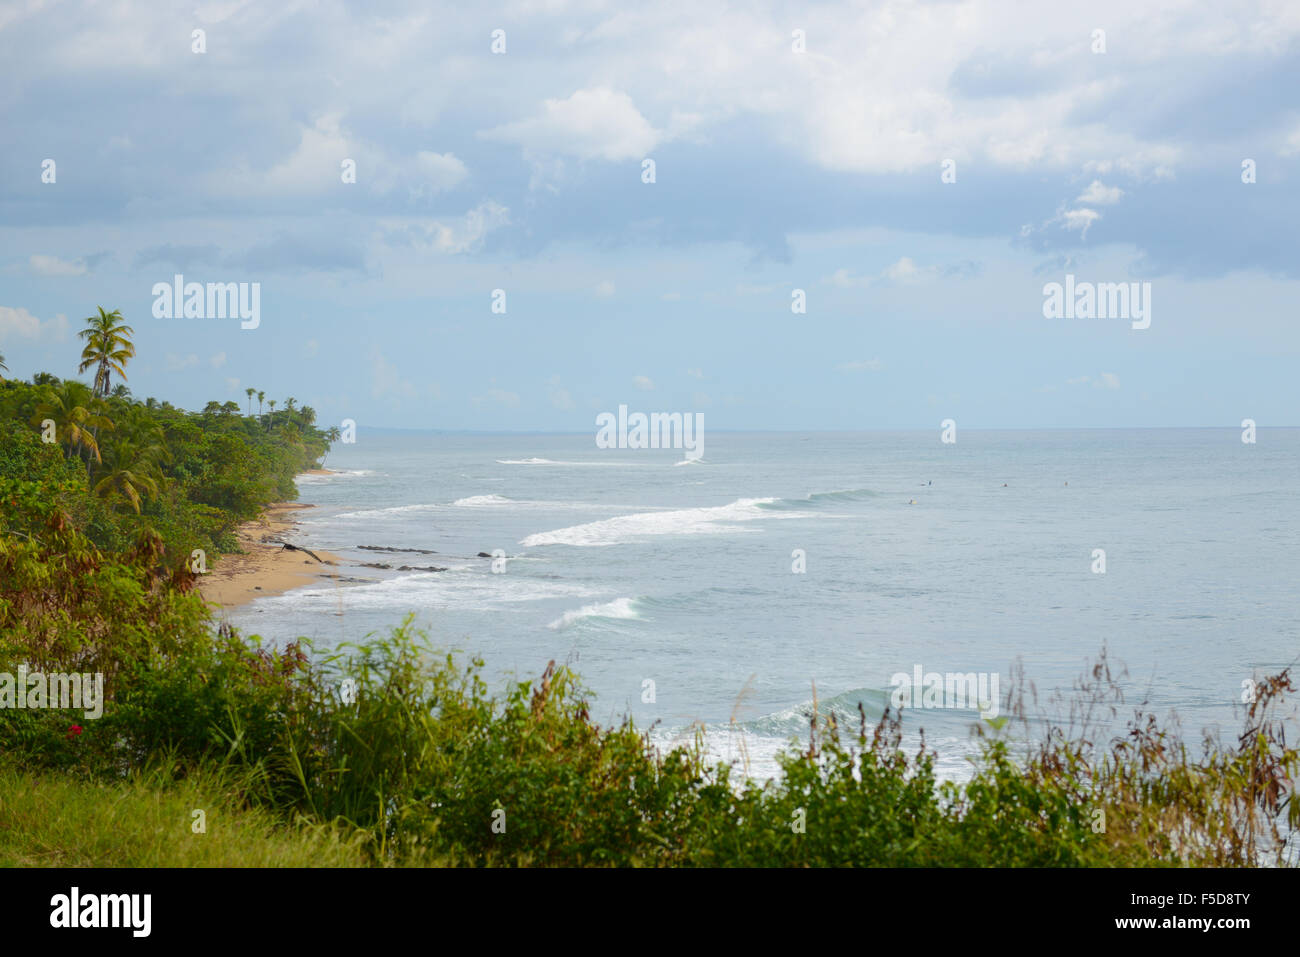 Indicators Beach is a popular surfing spot in Rincon, Puerto Rico. USA territory. Caribbean Island. Stock Photo